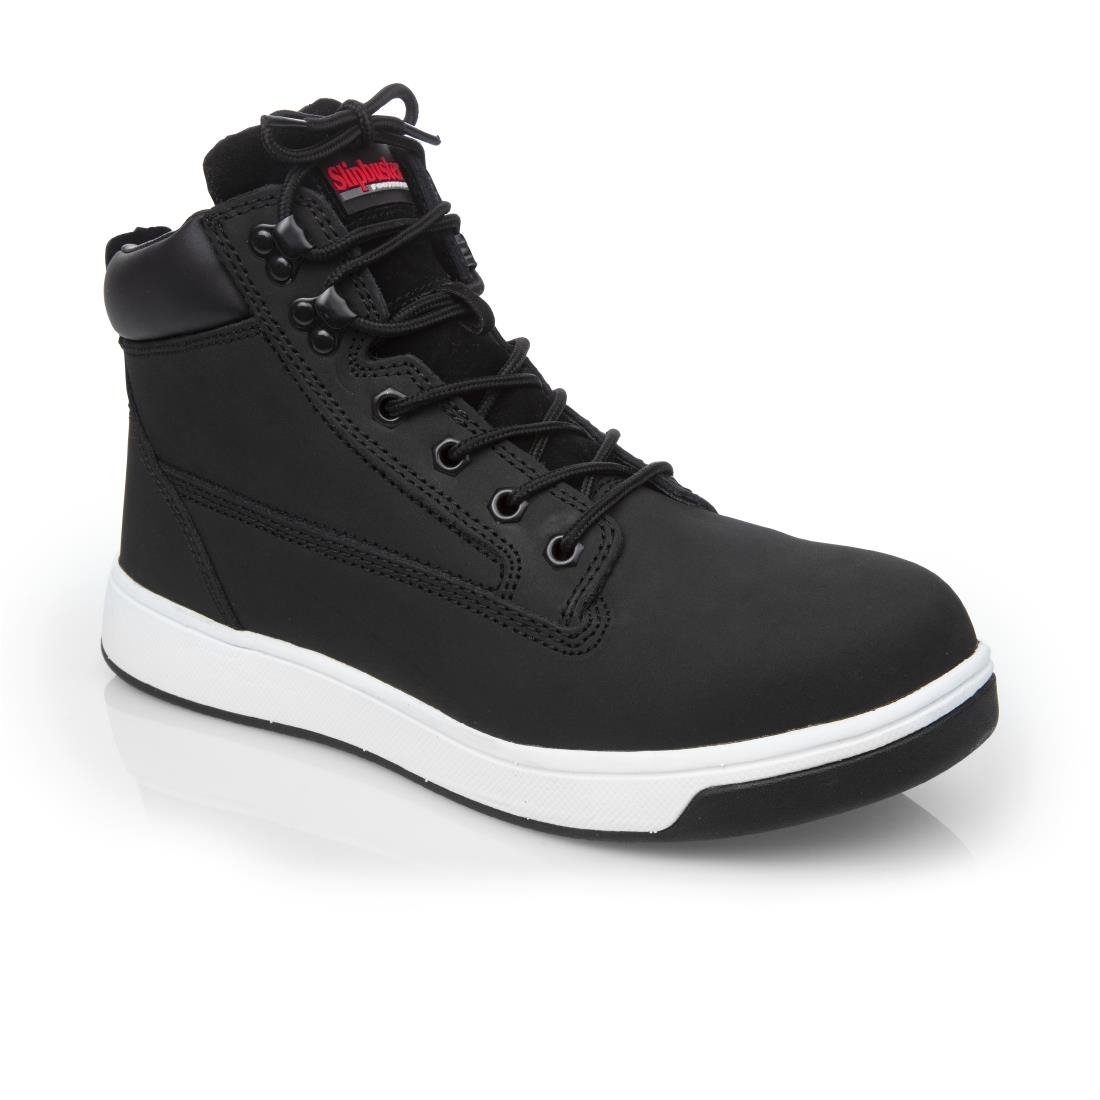 BB422-45 Slipbuster Sneaker Boots Black 45 JD Catering Equipment Solutions Ltd